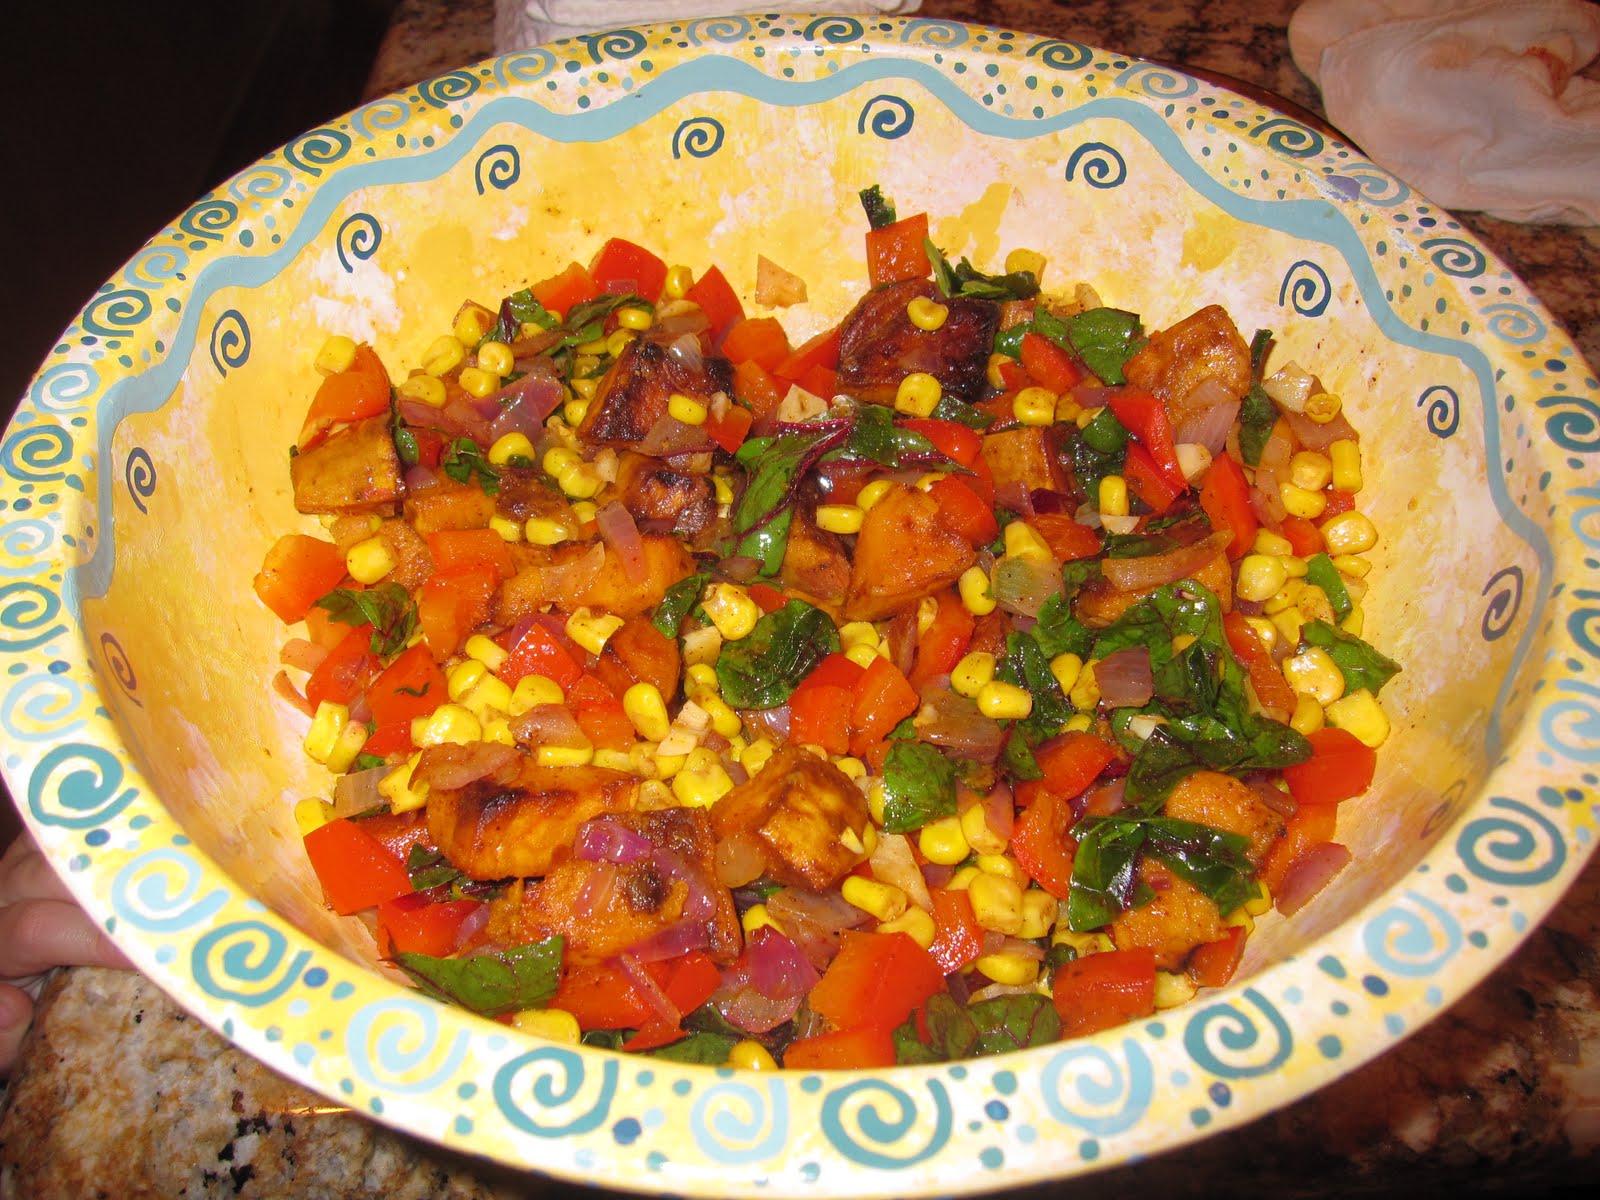 Meatballs For Sarah: Mexican Sweet Potato Salad